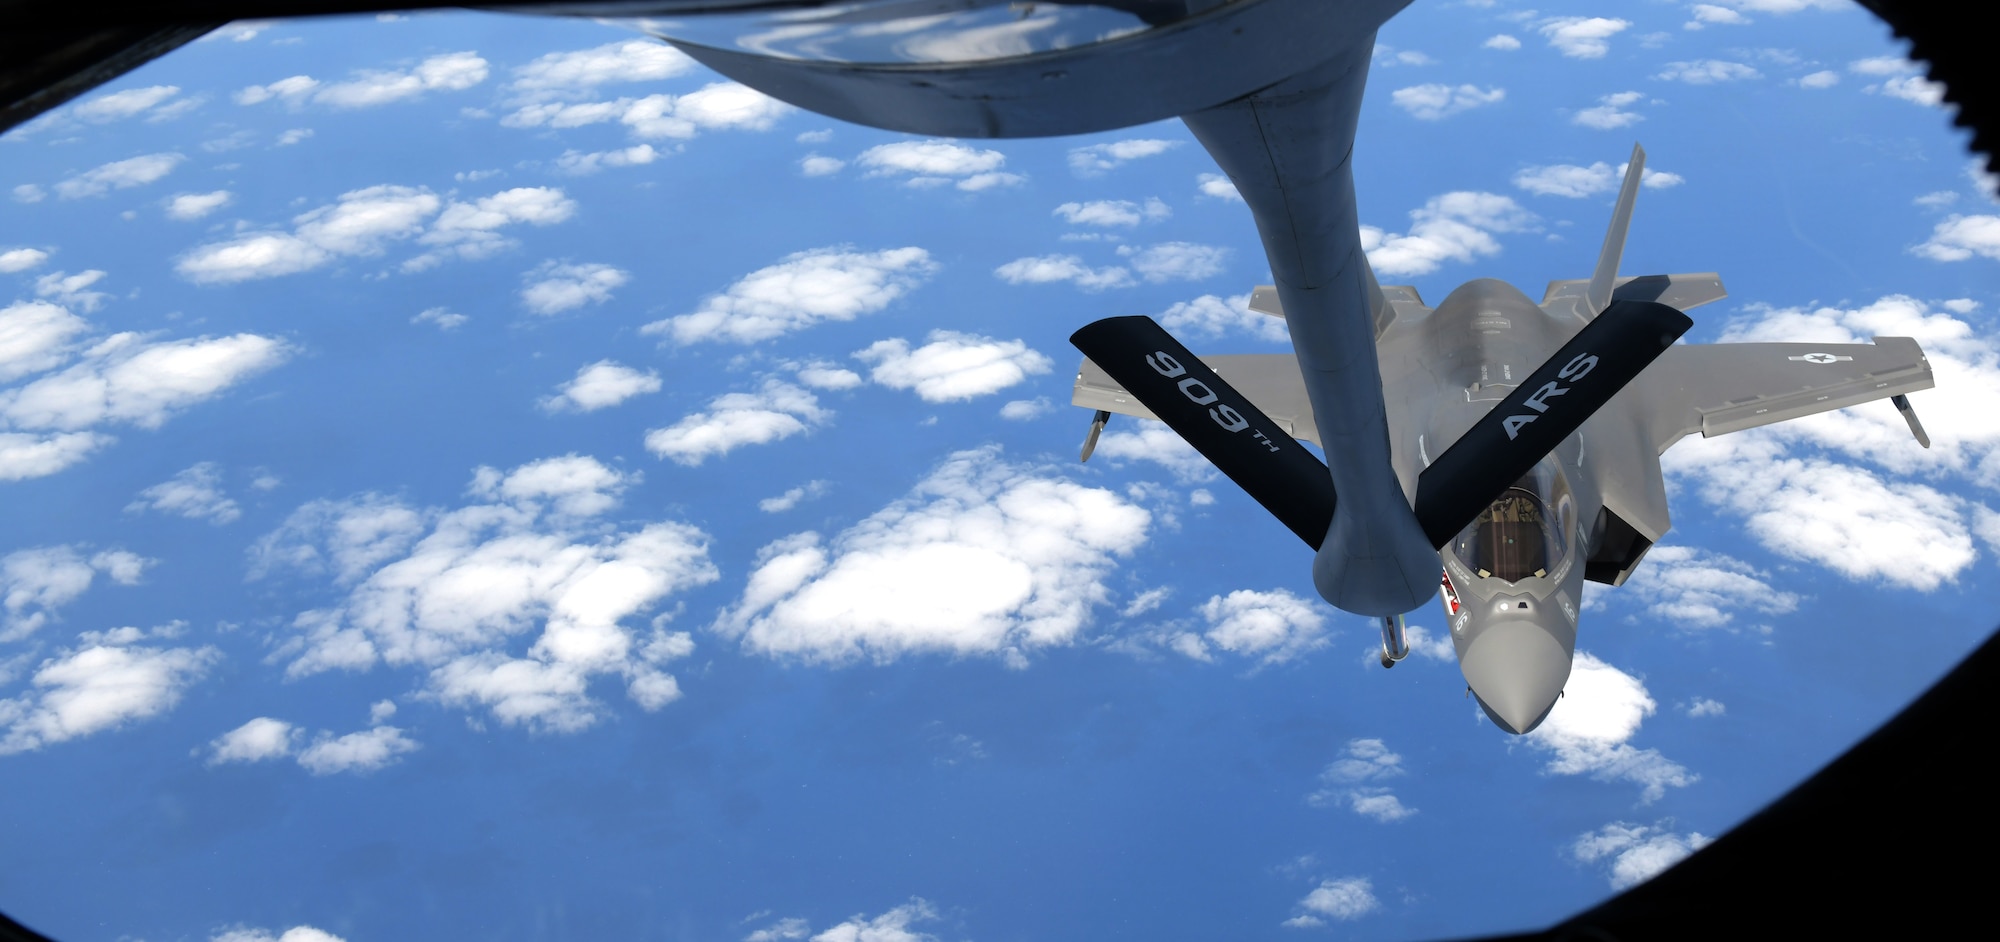 KC-135 from Kadena Air Base, Japan, refuels Marine aircraft during training exercise.